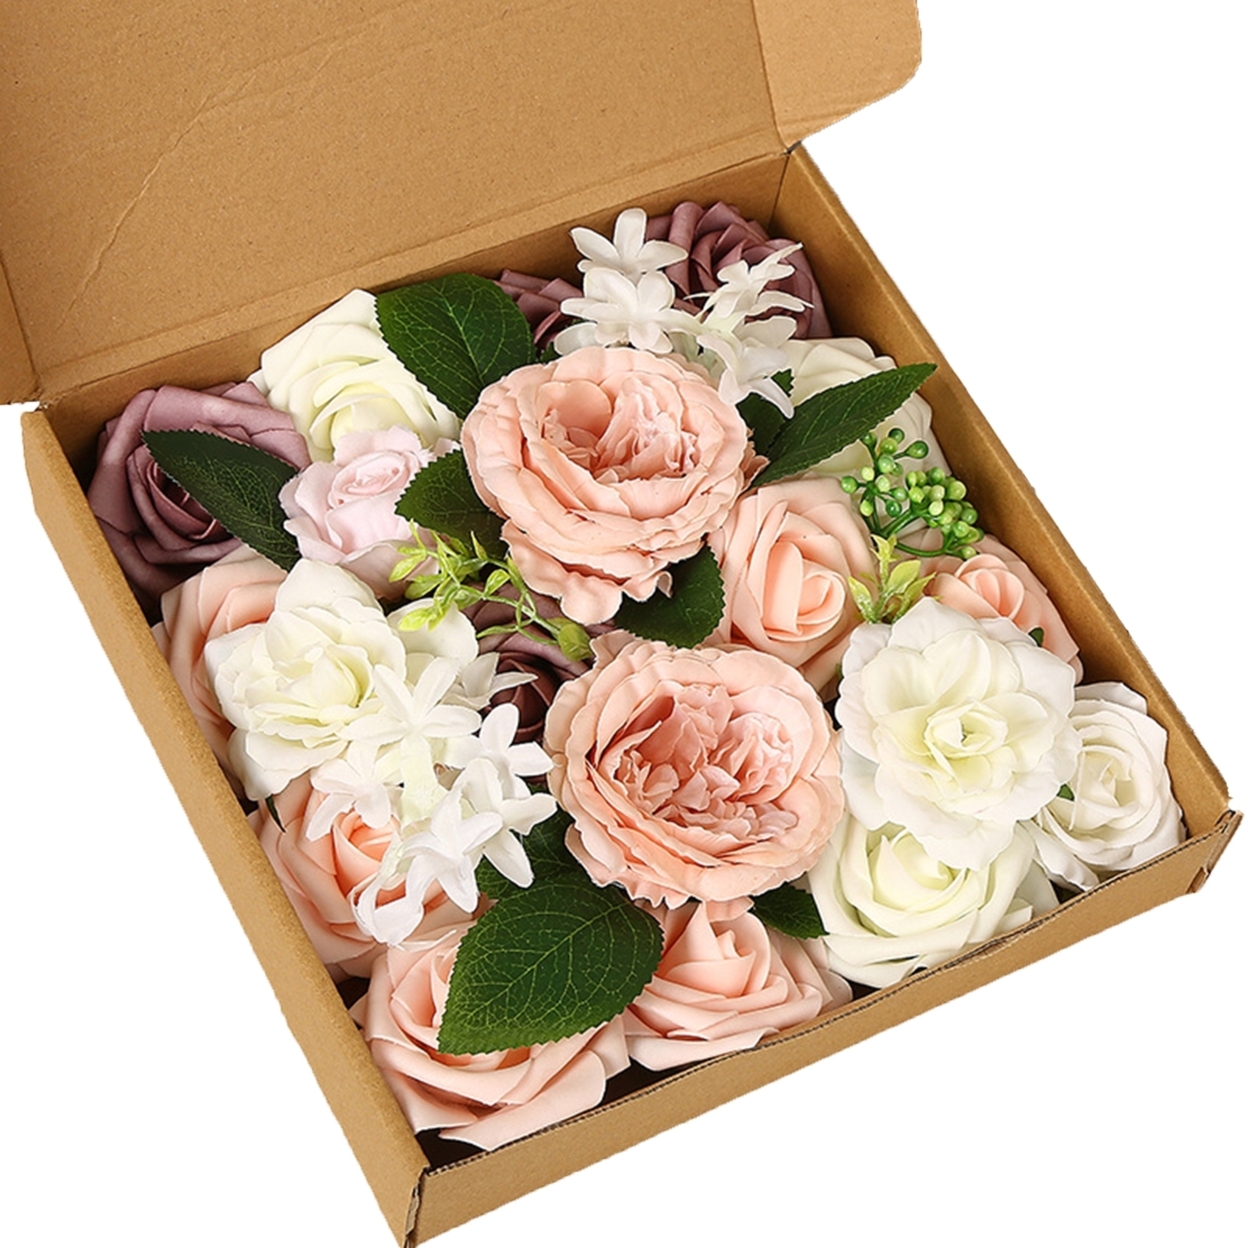 1 Box Beautiful Realistic Artificial Flower Faux Silk Flower Vivid Fine Texture Simulation Rose Wedding Accessories - pink purple